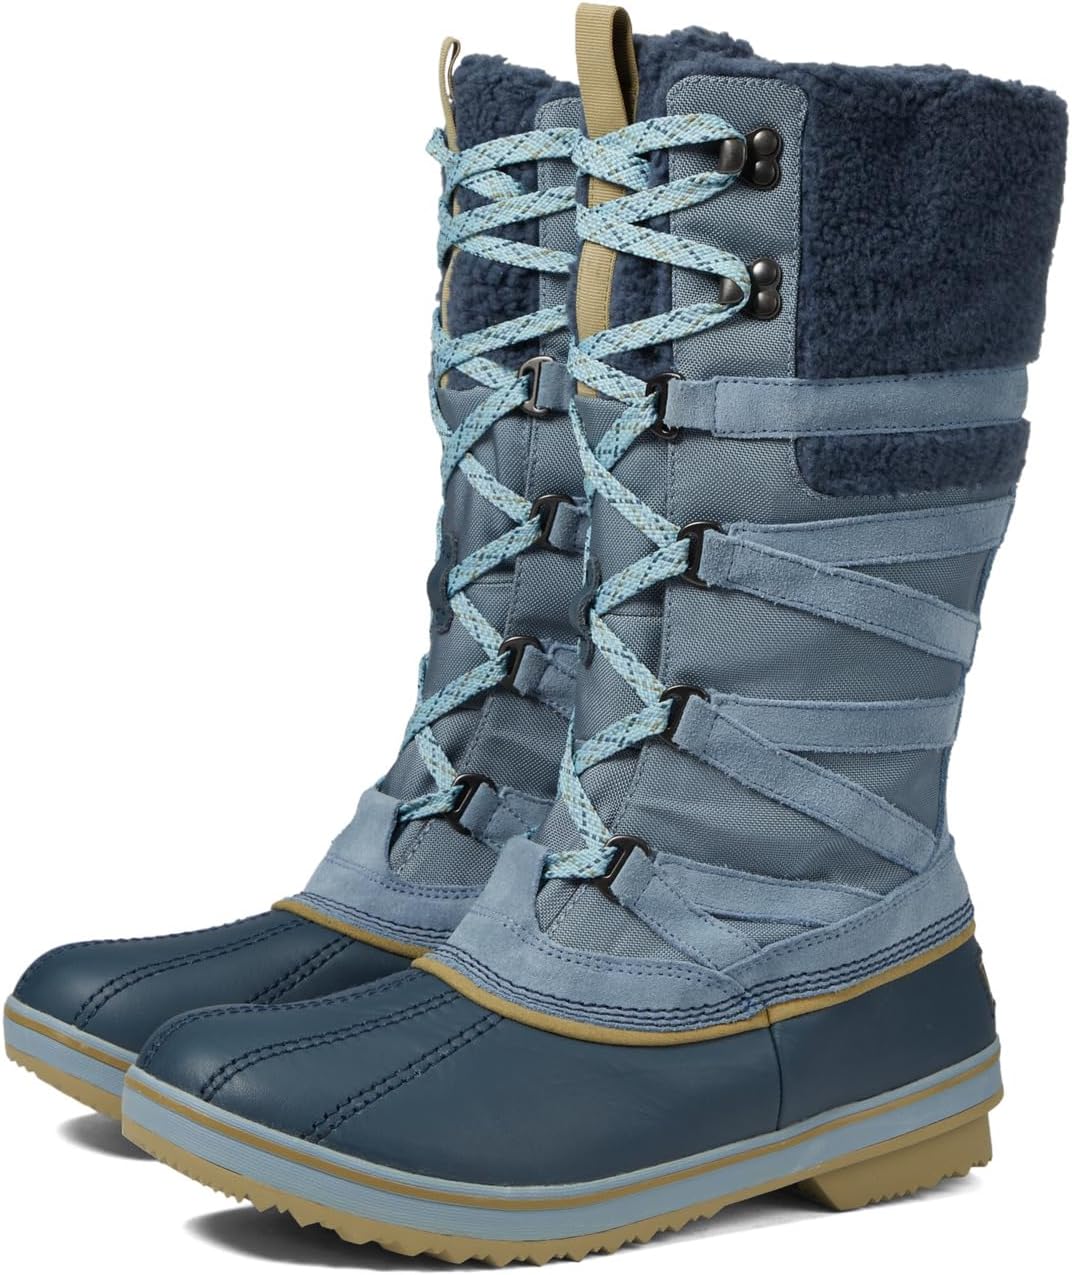 Зимние ботинки Rangeley Pac Boot Tall Water Resistant Insulated L.L.Bean, цвет Steel Blue/Storm Blue steel d blue